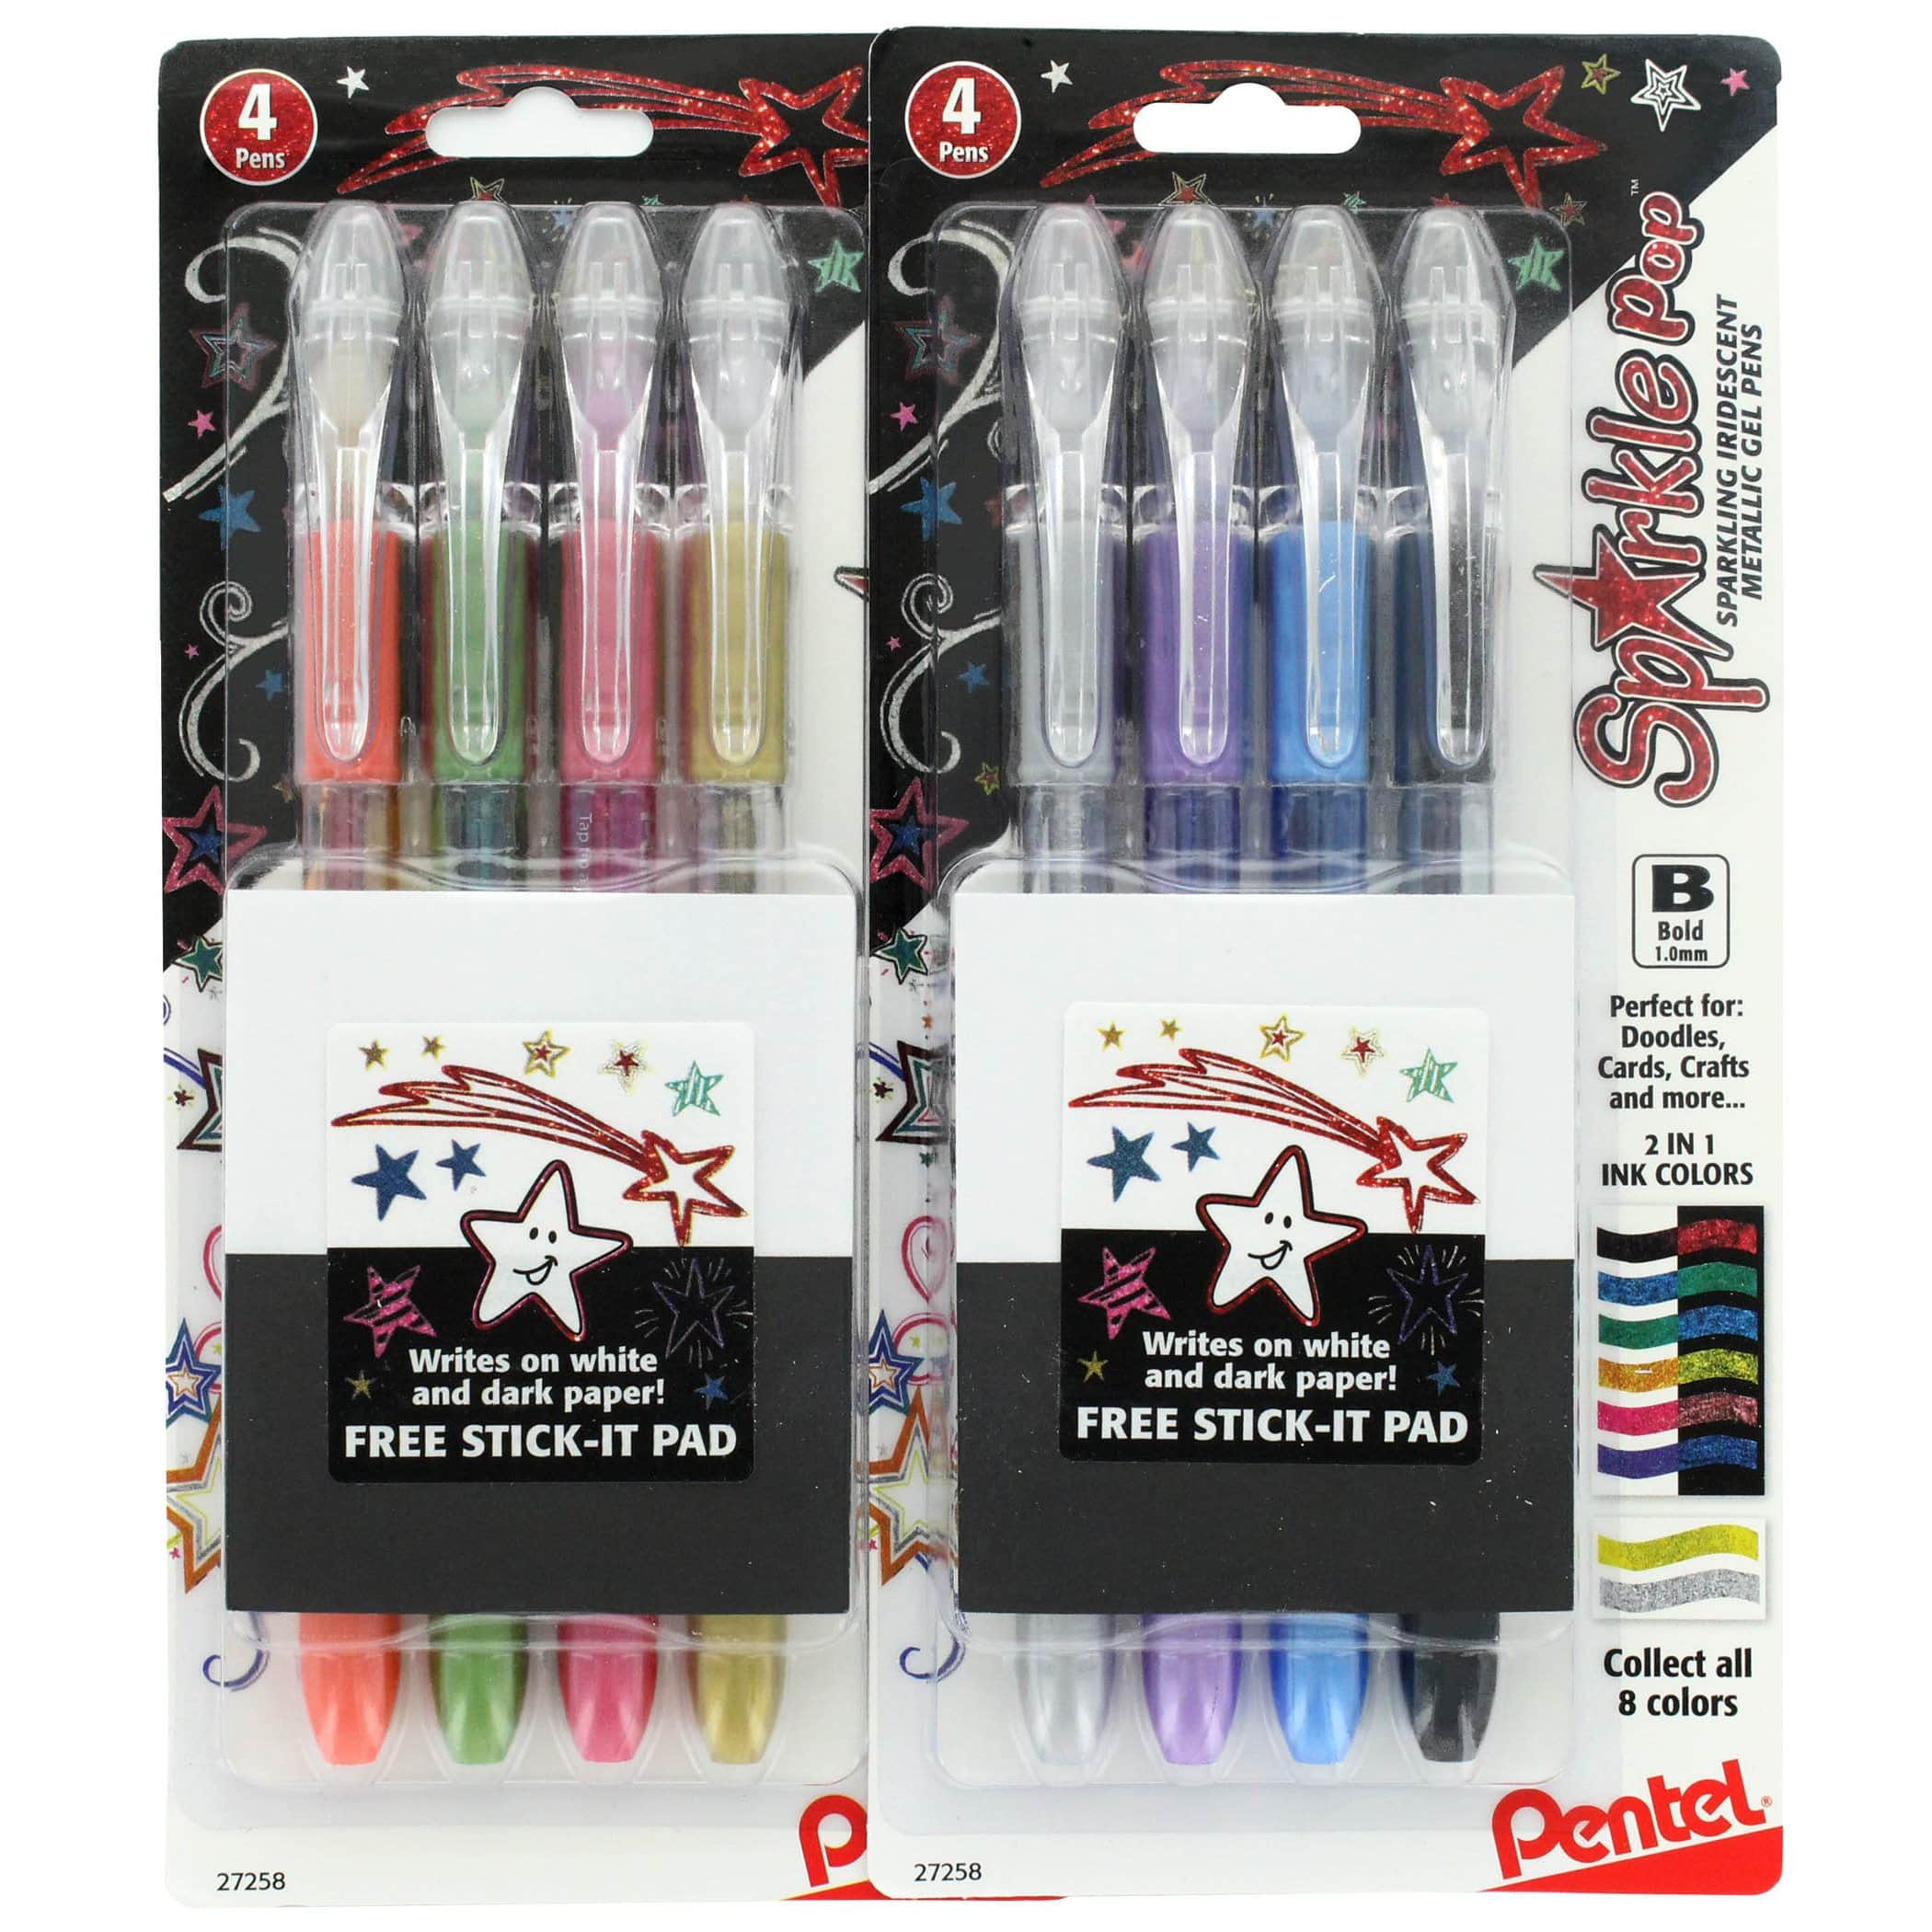 Pentel Sparkle Pop Metallic Gel Pen Set, 8-Colors